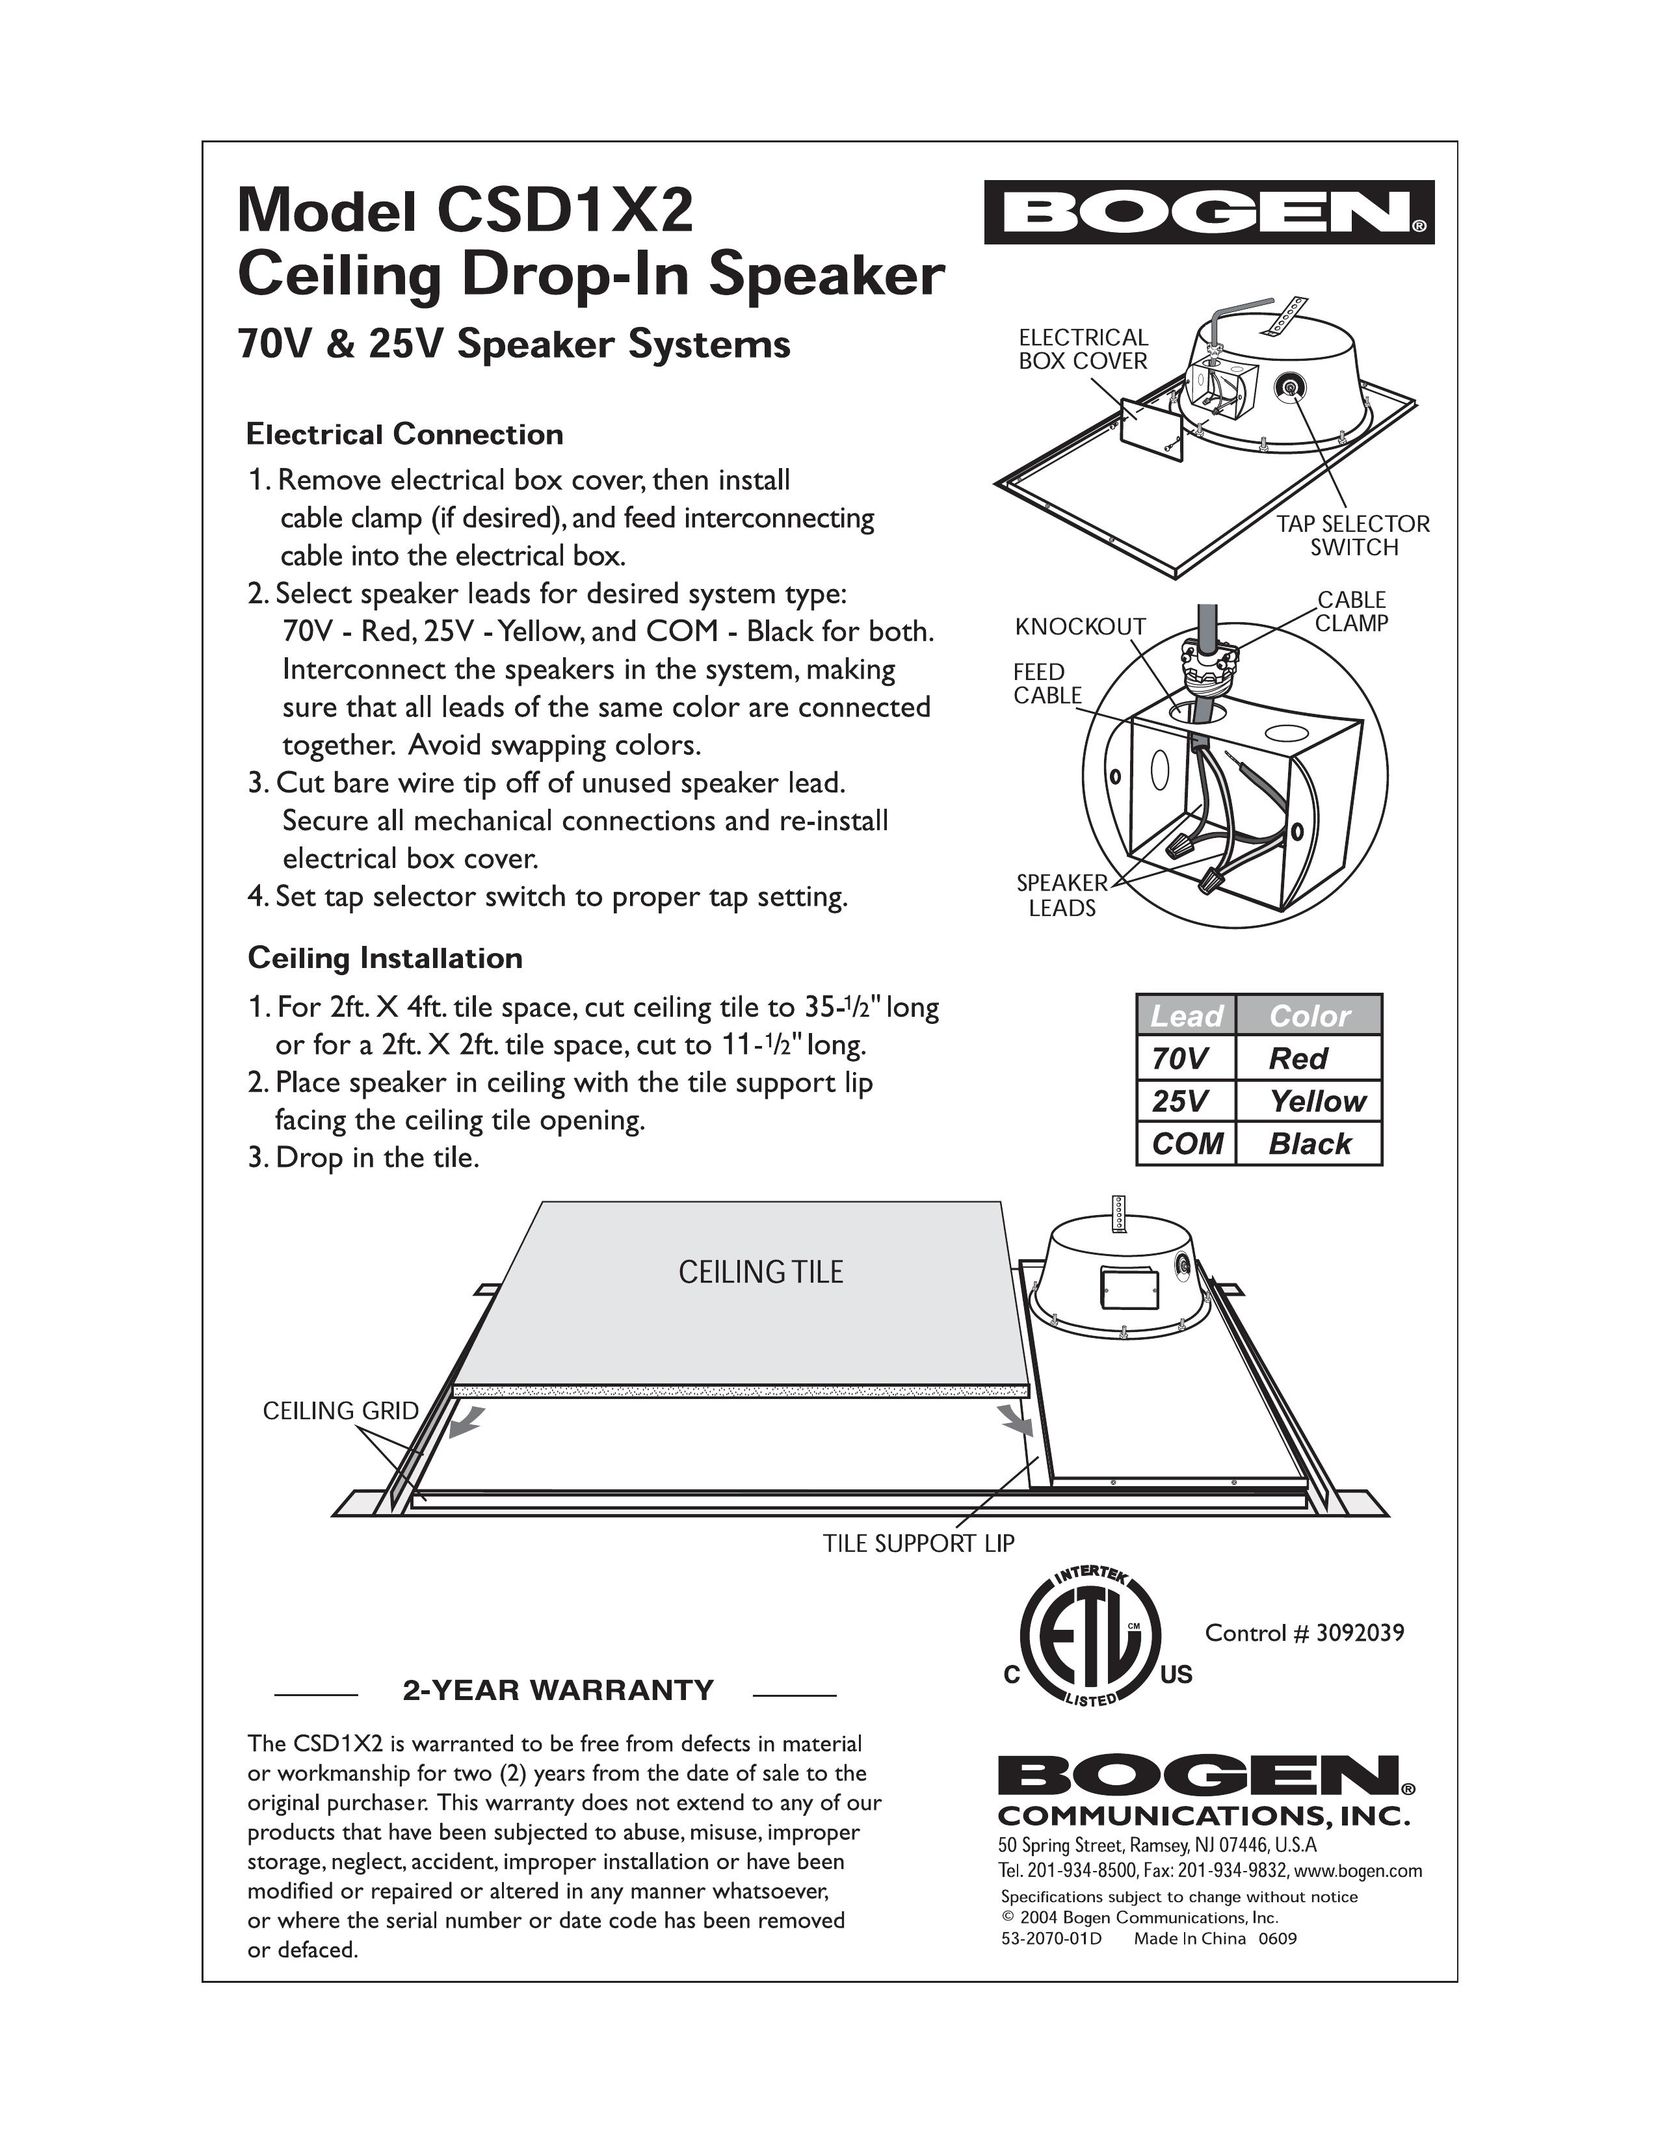 Bogen CSD1X62 Speaker User Manual